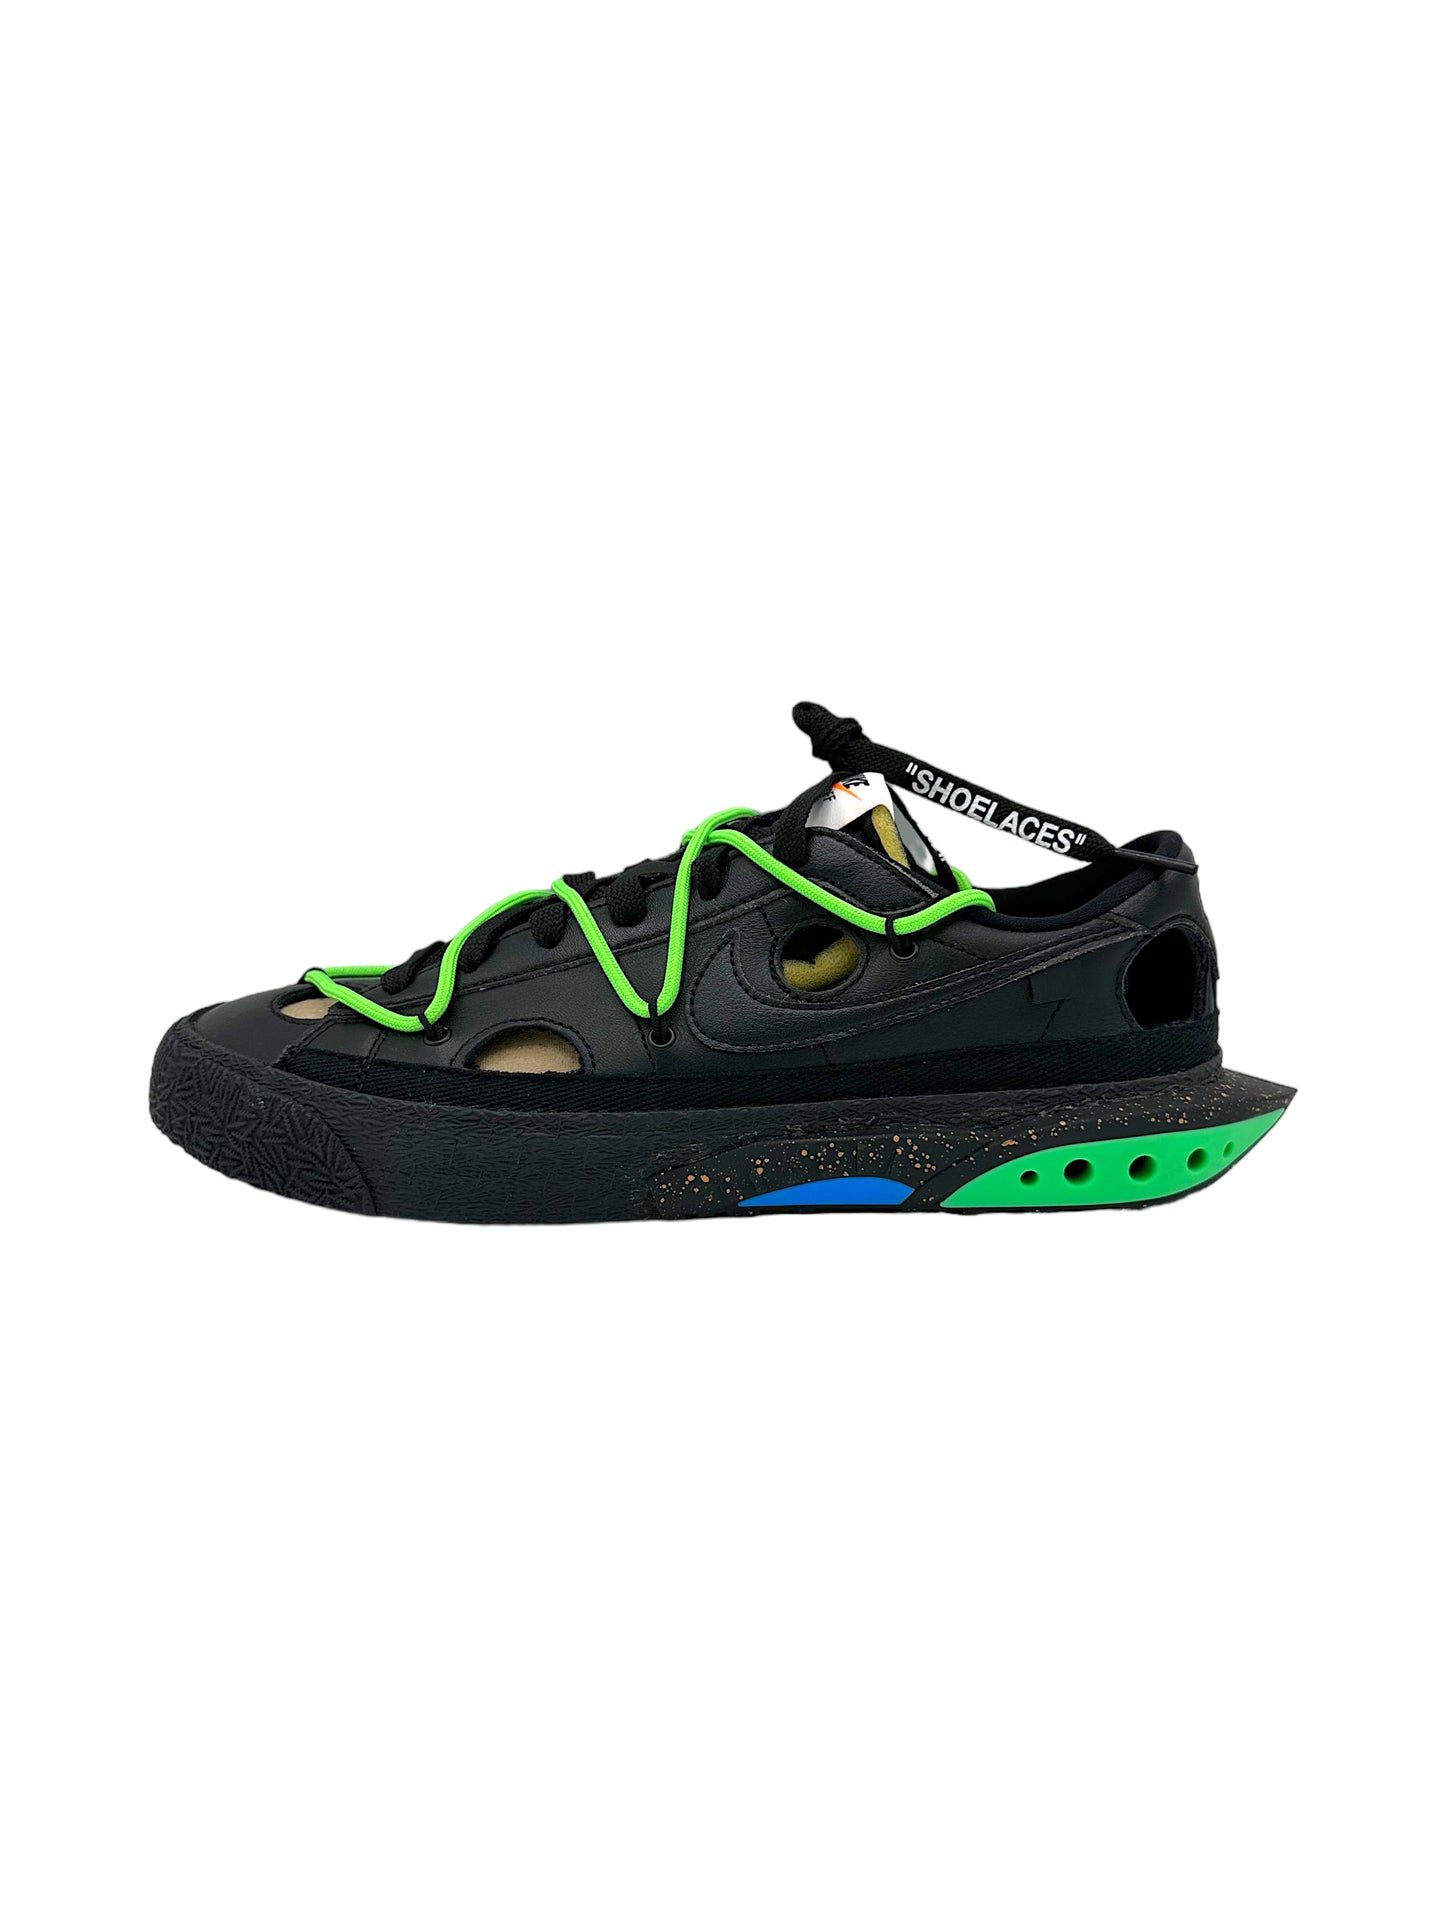 Nike Off-White Blazer Low 'Black Electro Green' 8.5 M / 10 W